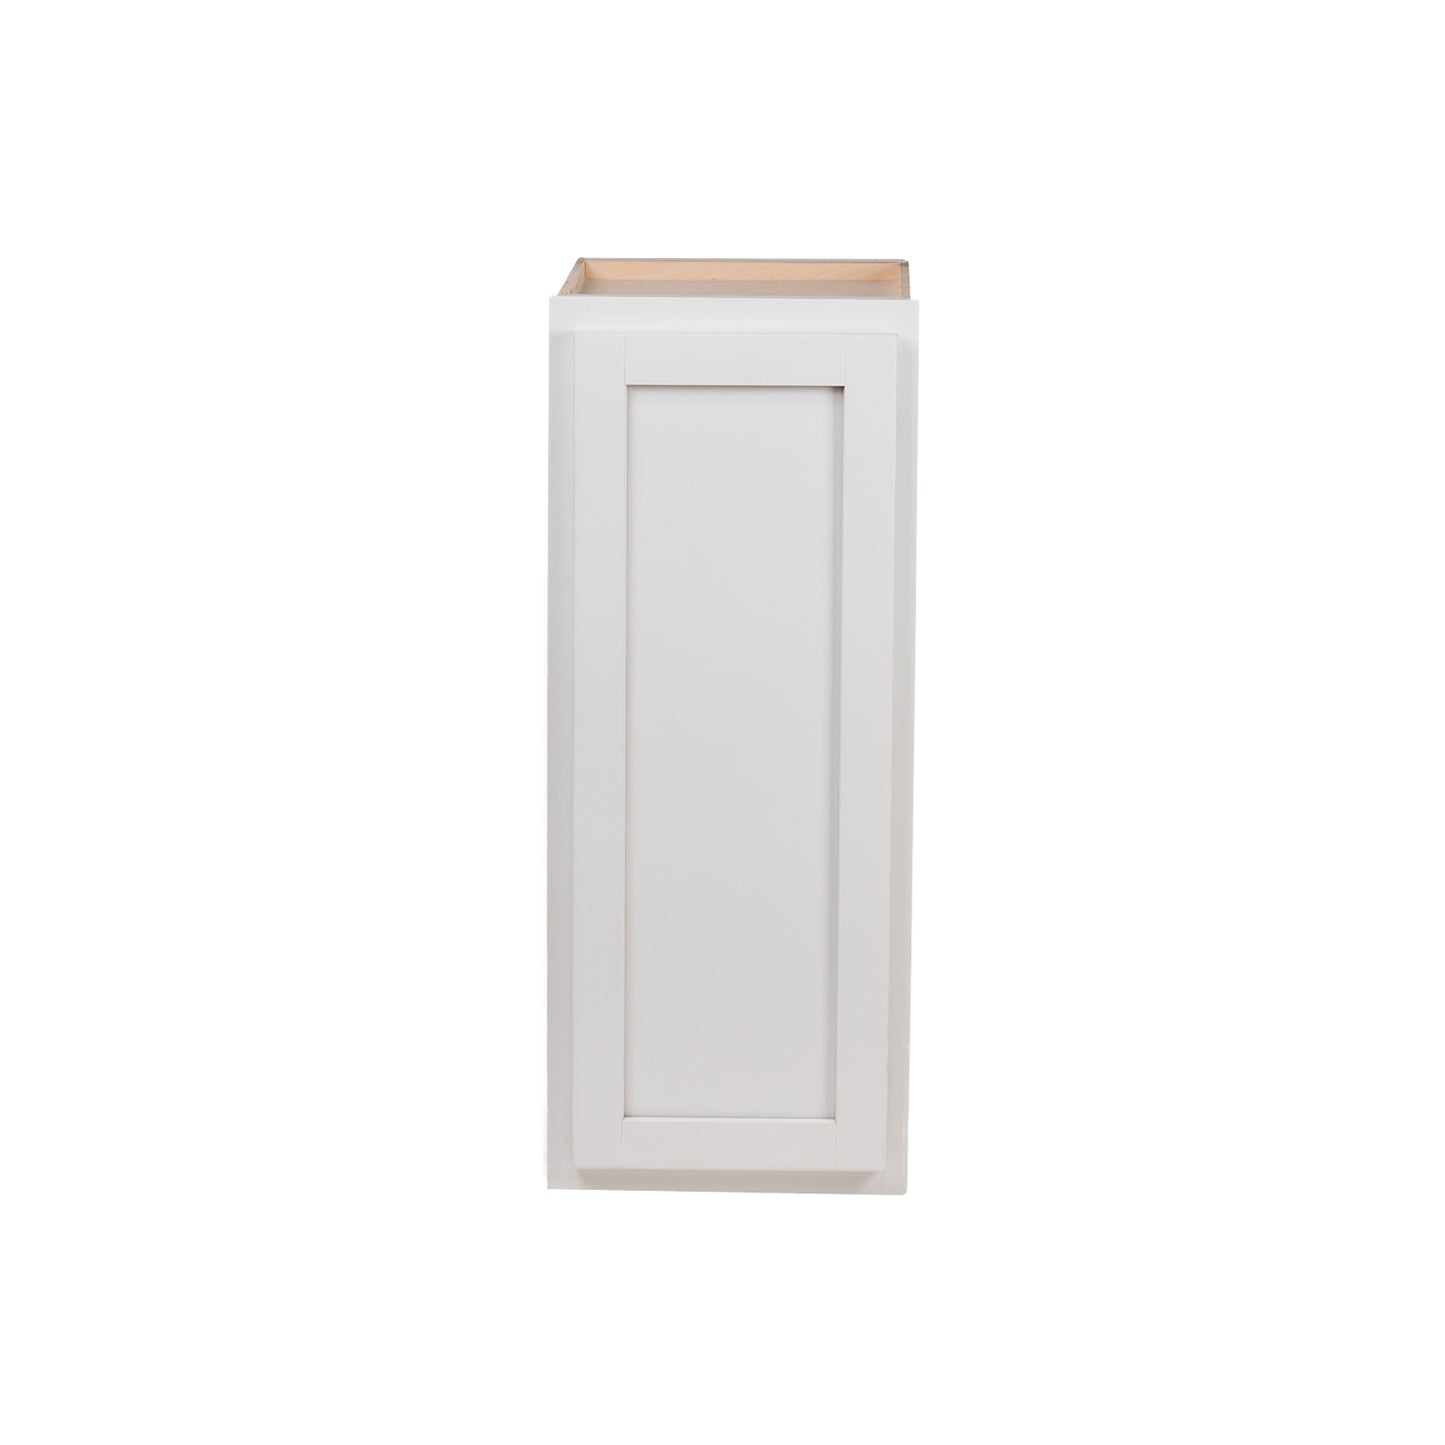 Quicklock RTA (Ready-to-Assemble) Pure White 15"Wx36"Hx12"D Wall Cabinet